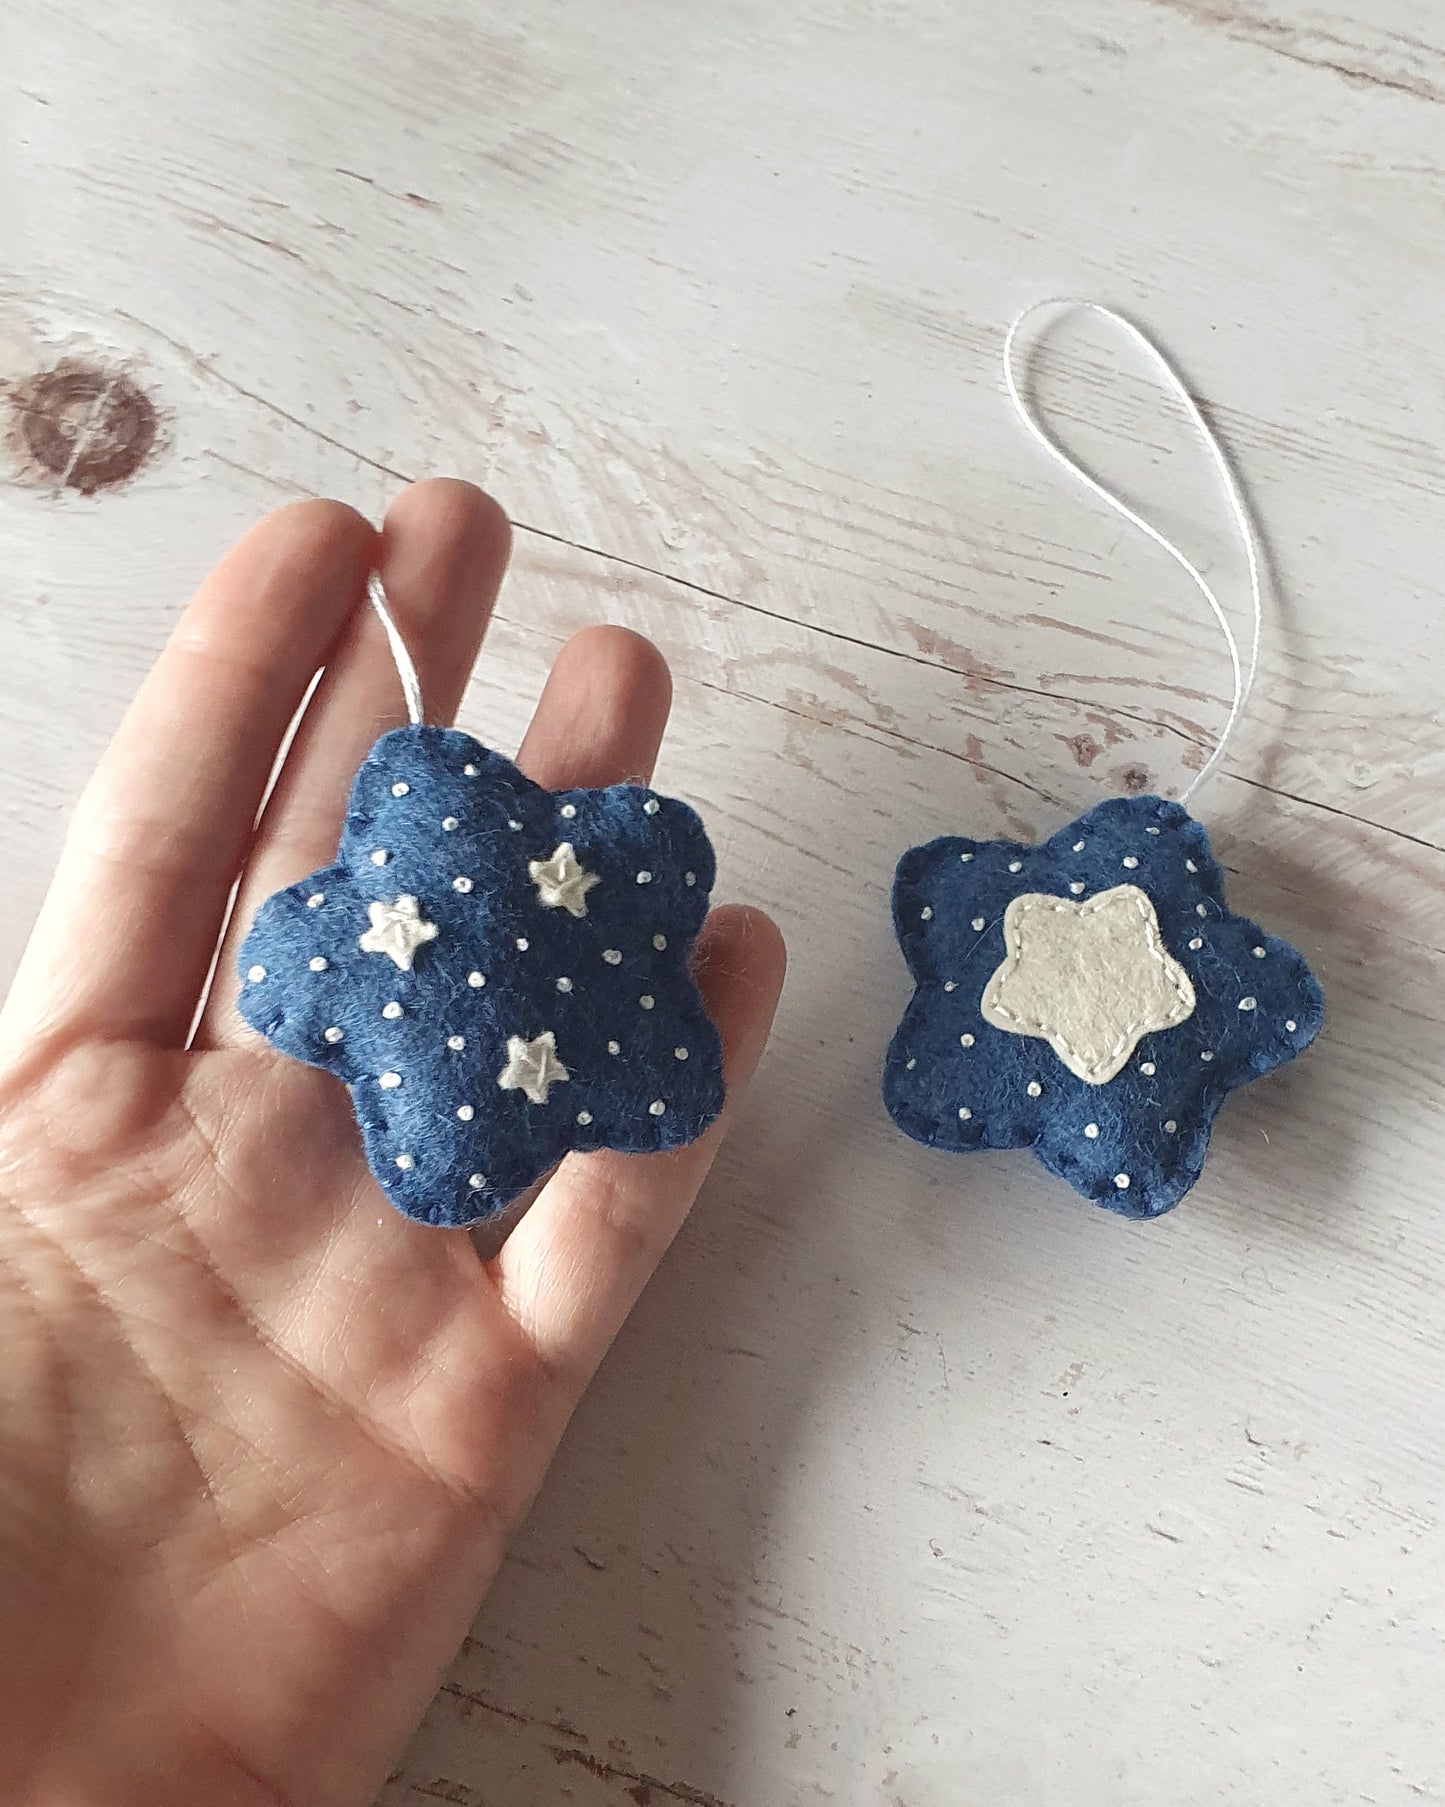 Felt star ornament set of 2, blue Christmas decoration, felt stars